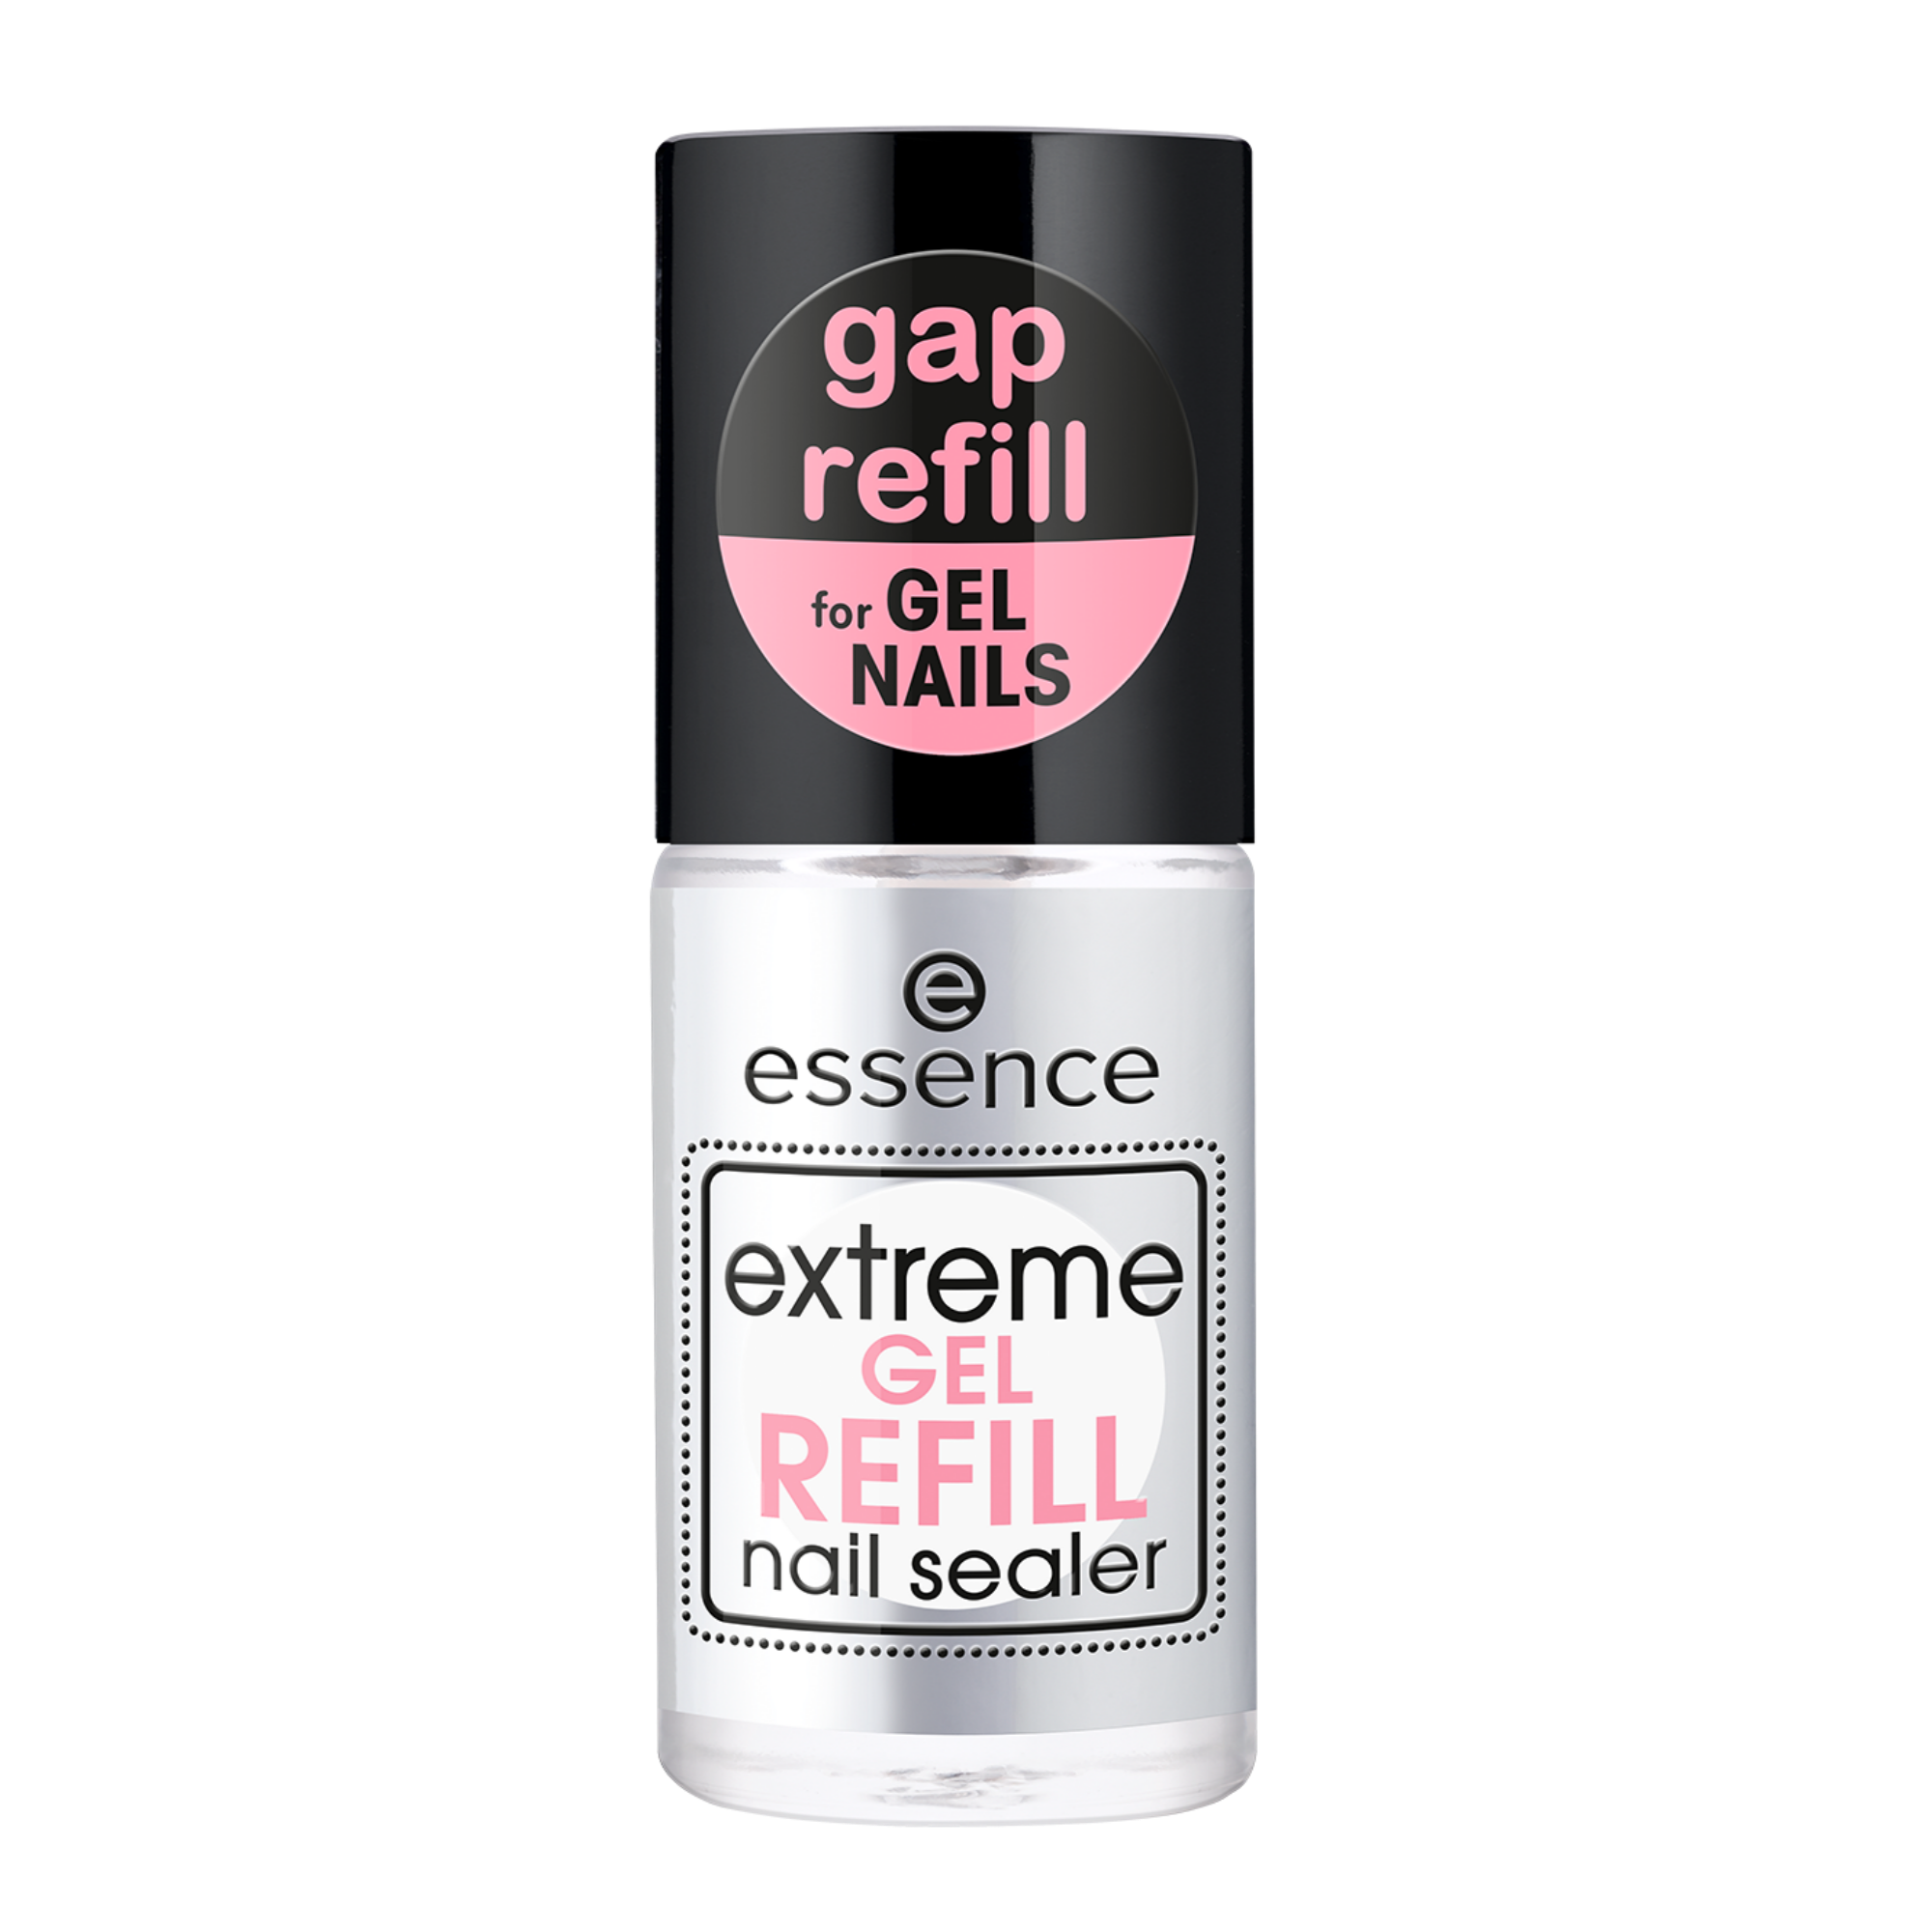 extreme GEL refill nail sealer